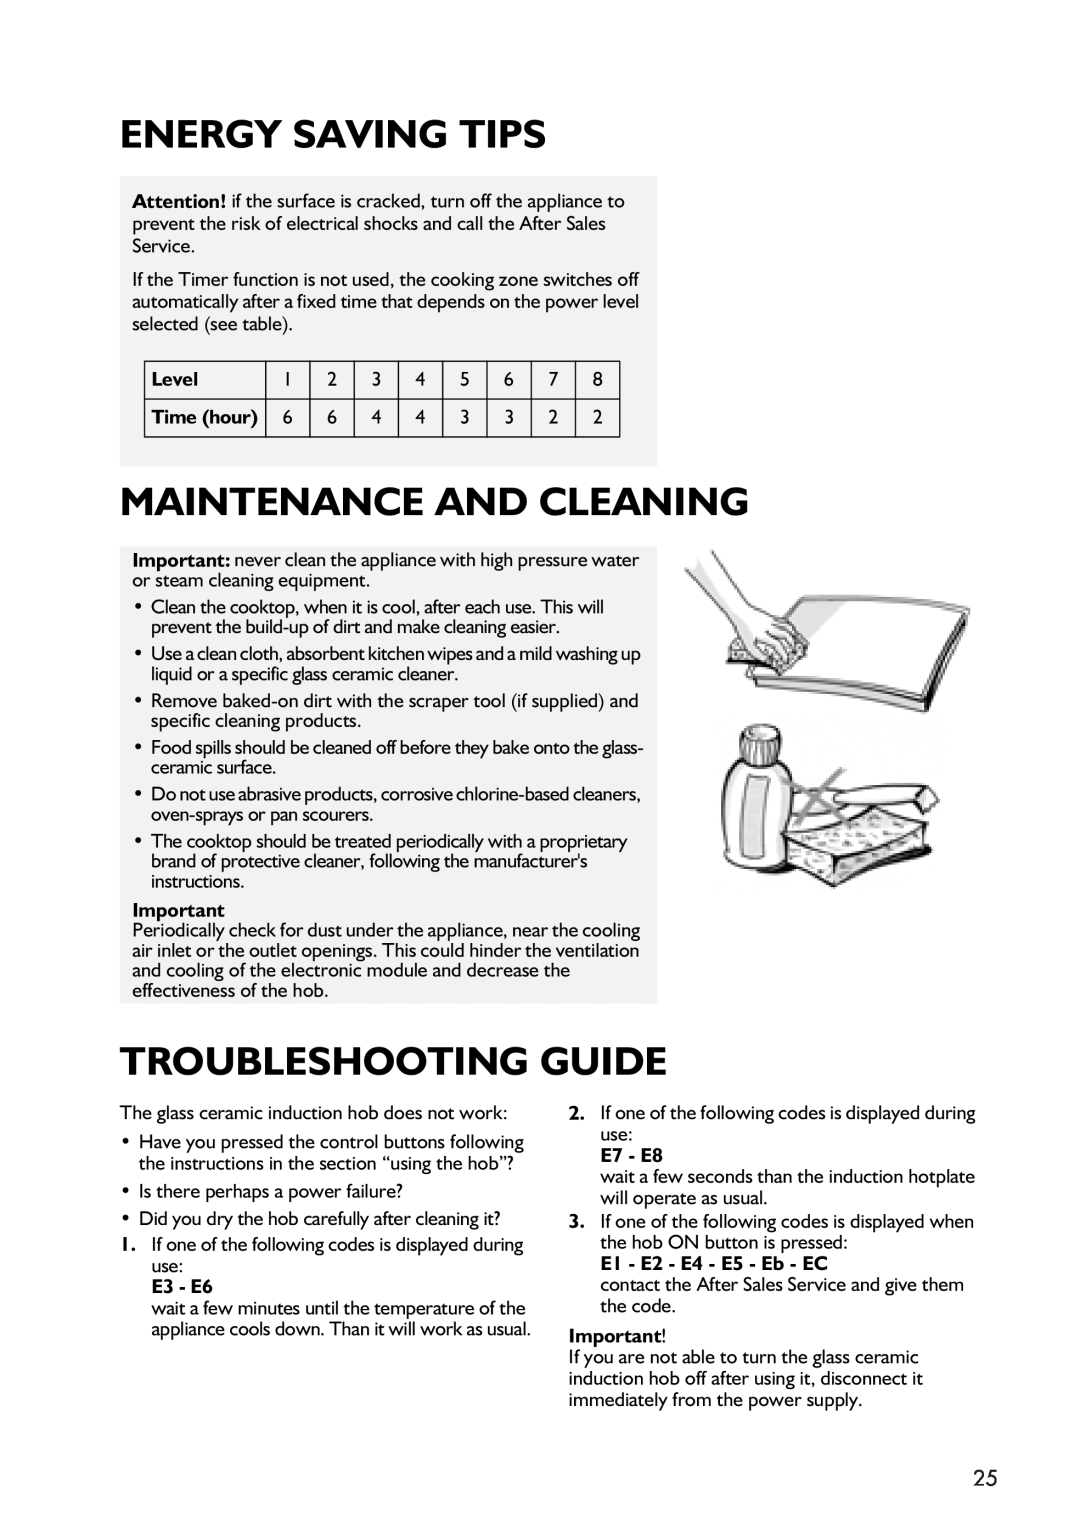 IKEA HIN1T manual Energy Saving Tips, Maintenance And Cleaning, Troubleshooting Guide, E3 - E6, E7 - E8 